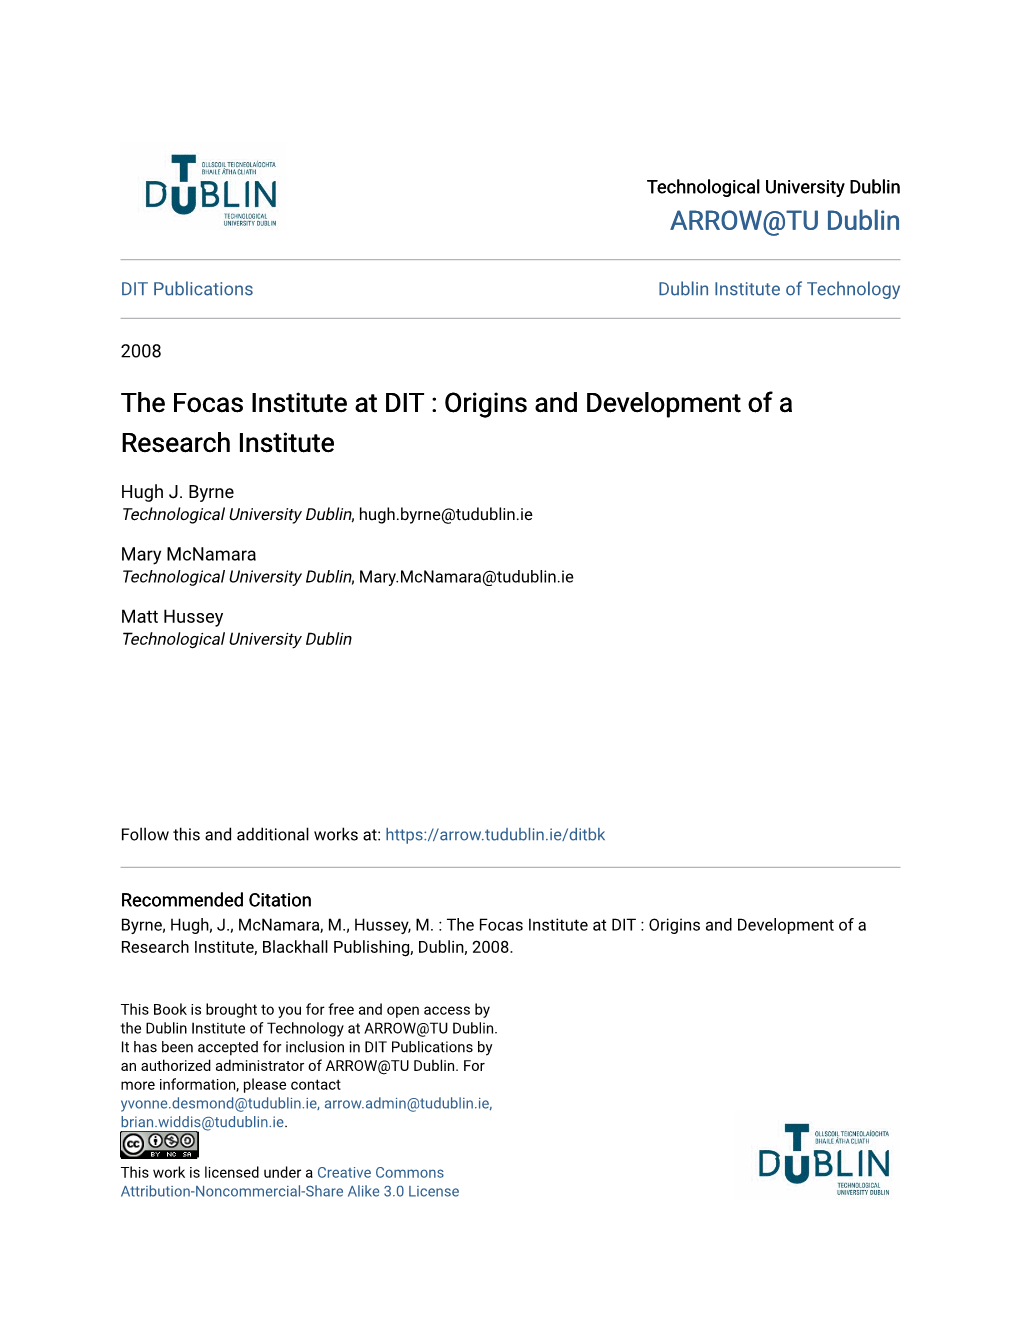 The Focas Institute at DIT : Origins and Development of a Research Institute